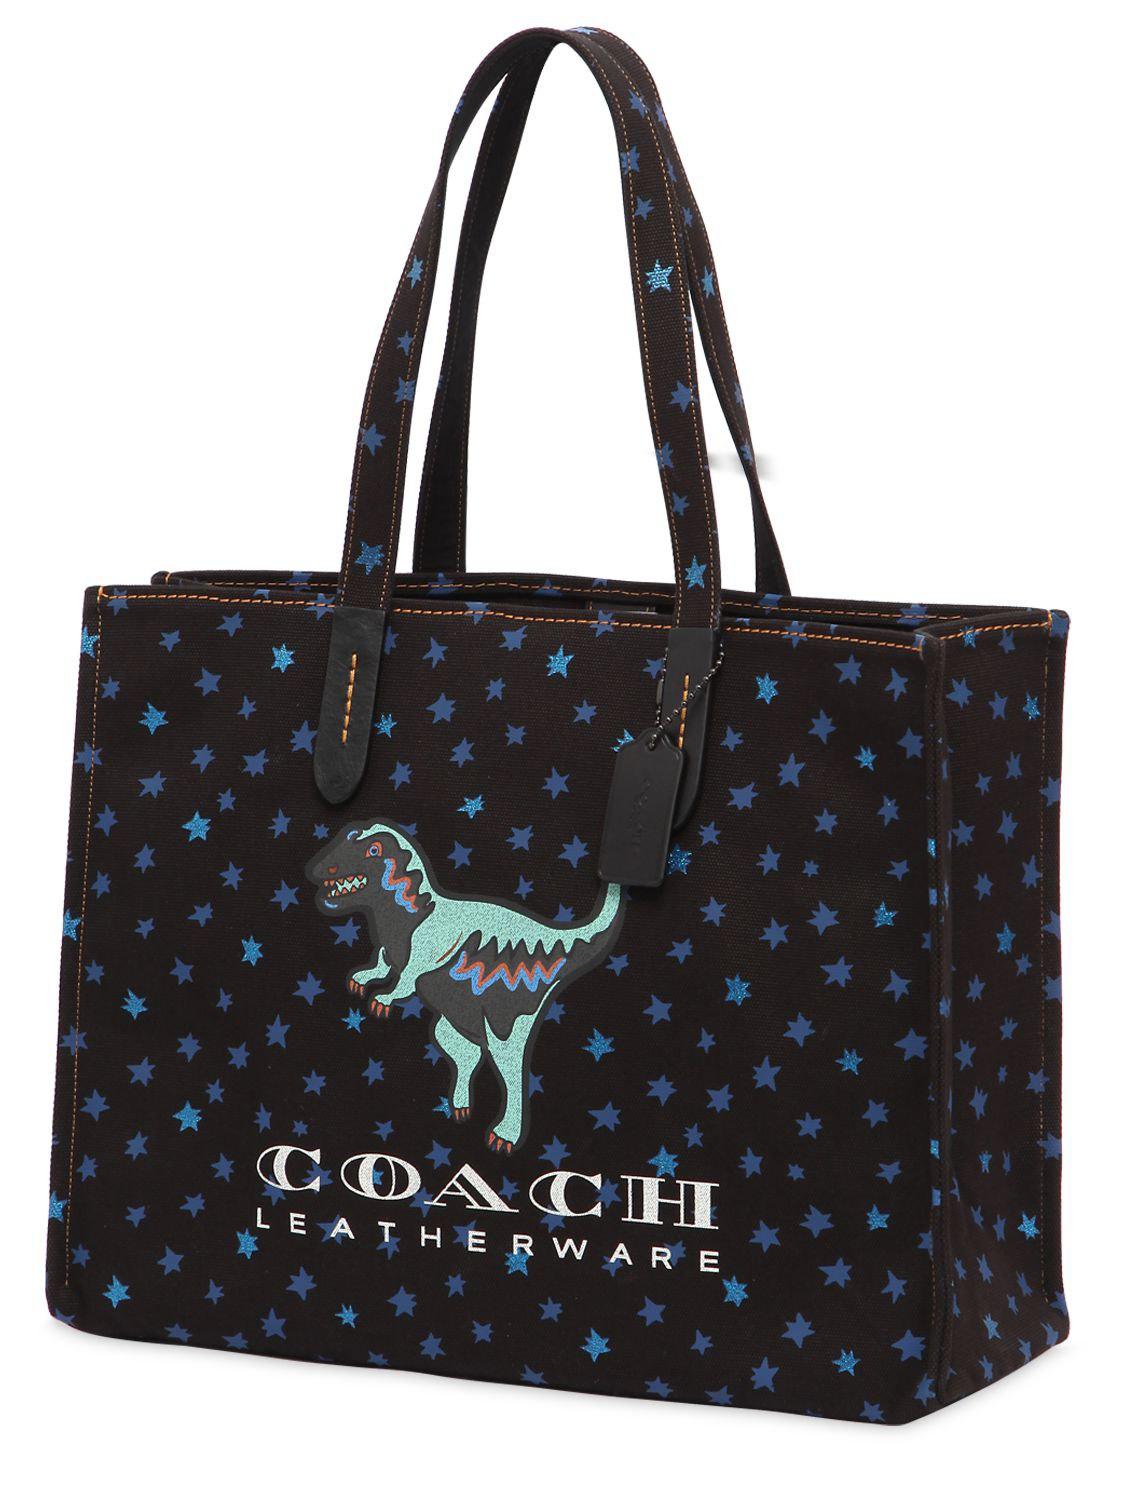 COACH T-rex & Stars Cotton Canvas Tote Bag in Black - Lyst